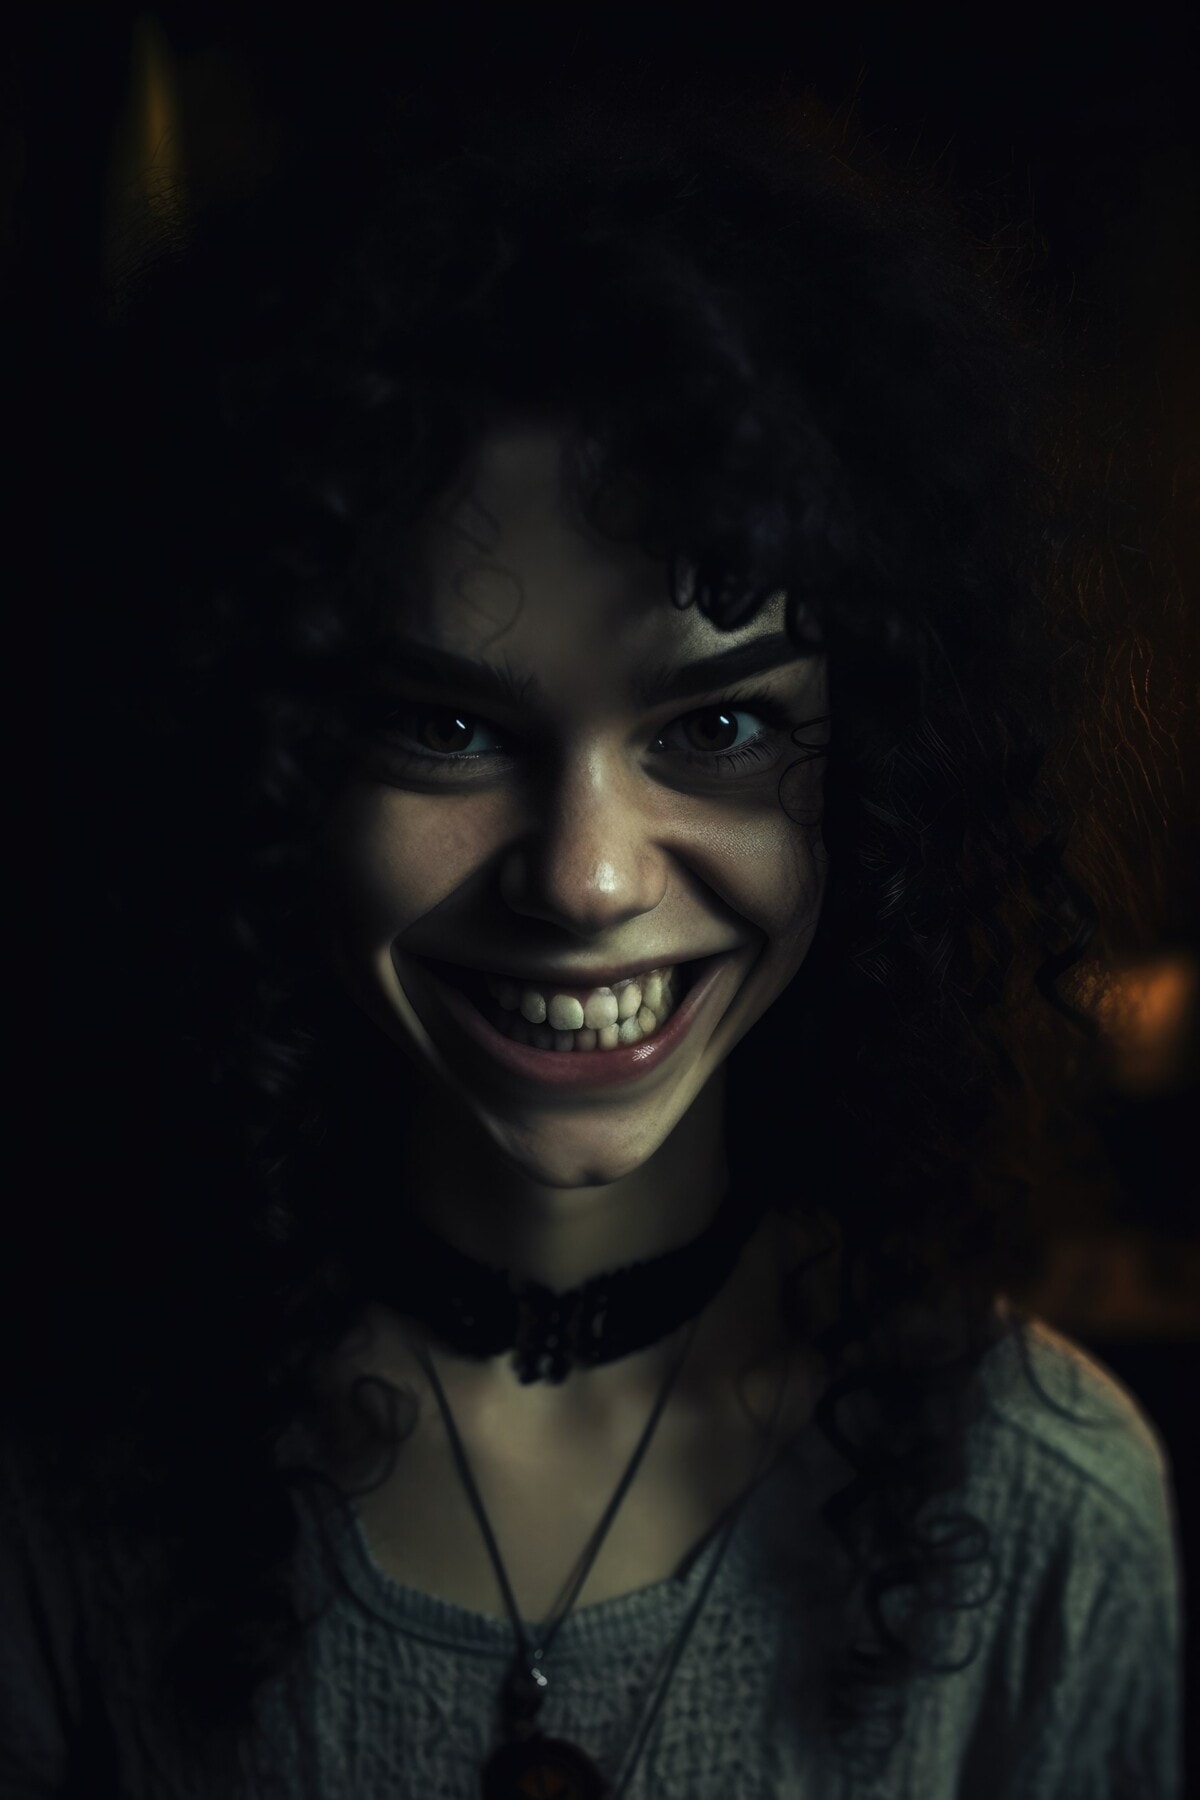 Woman with creepy fake smile in dark atmosphere